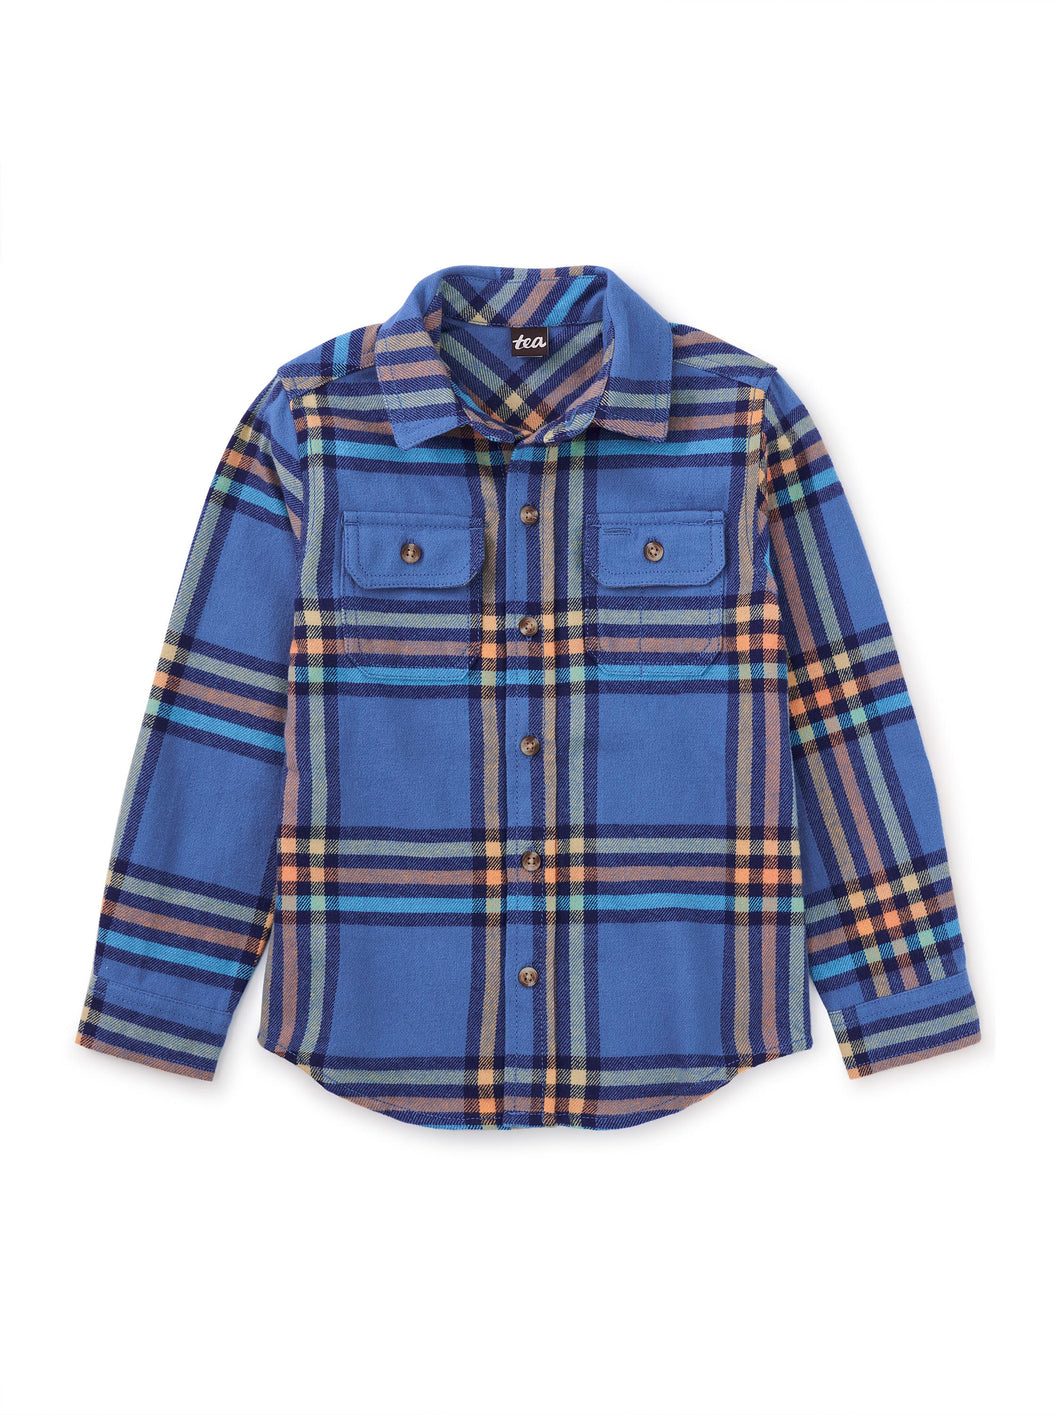 Tea Collection Flannel Button Up Shirt - Bleu Plaid